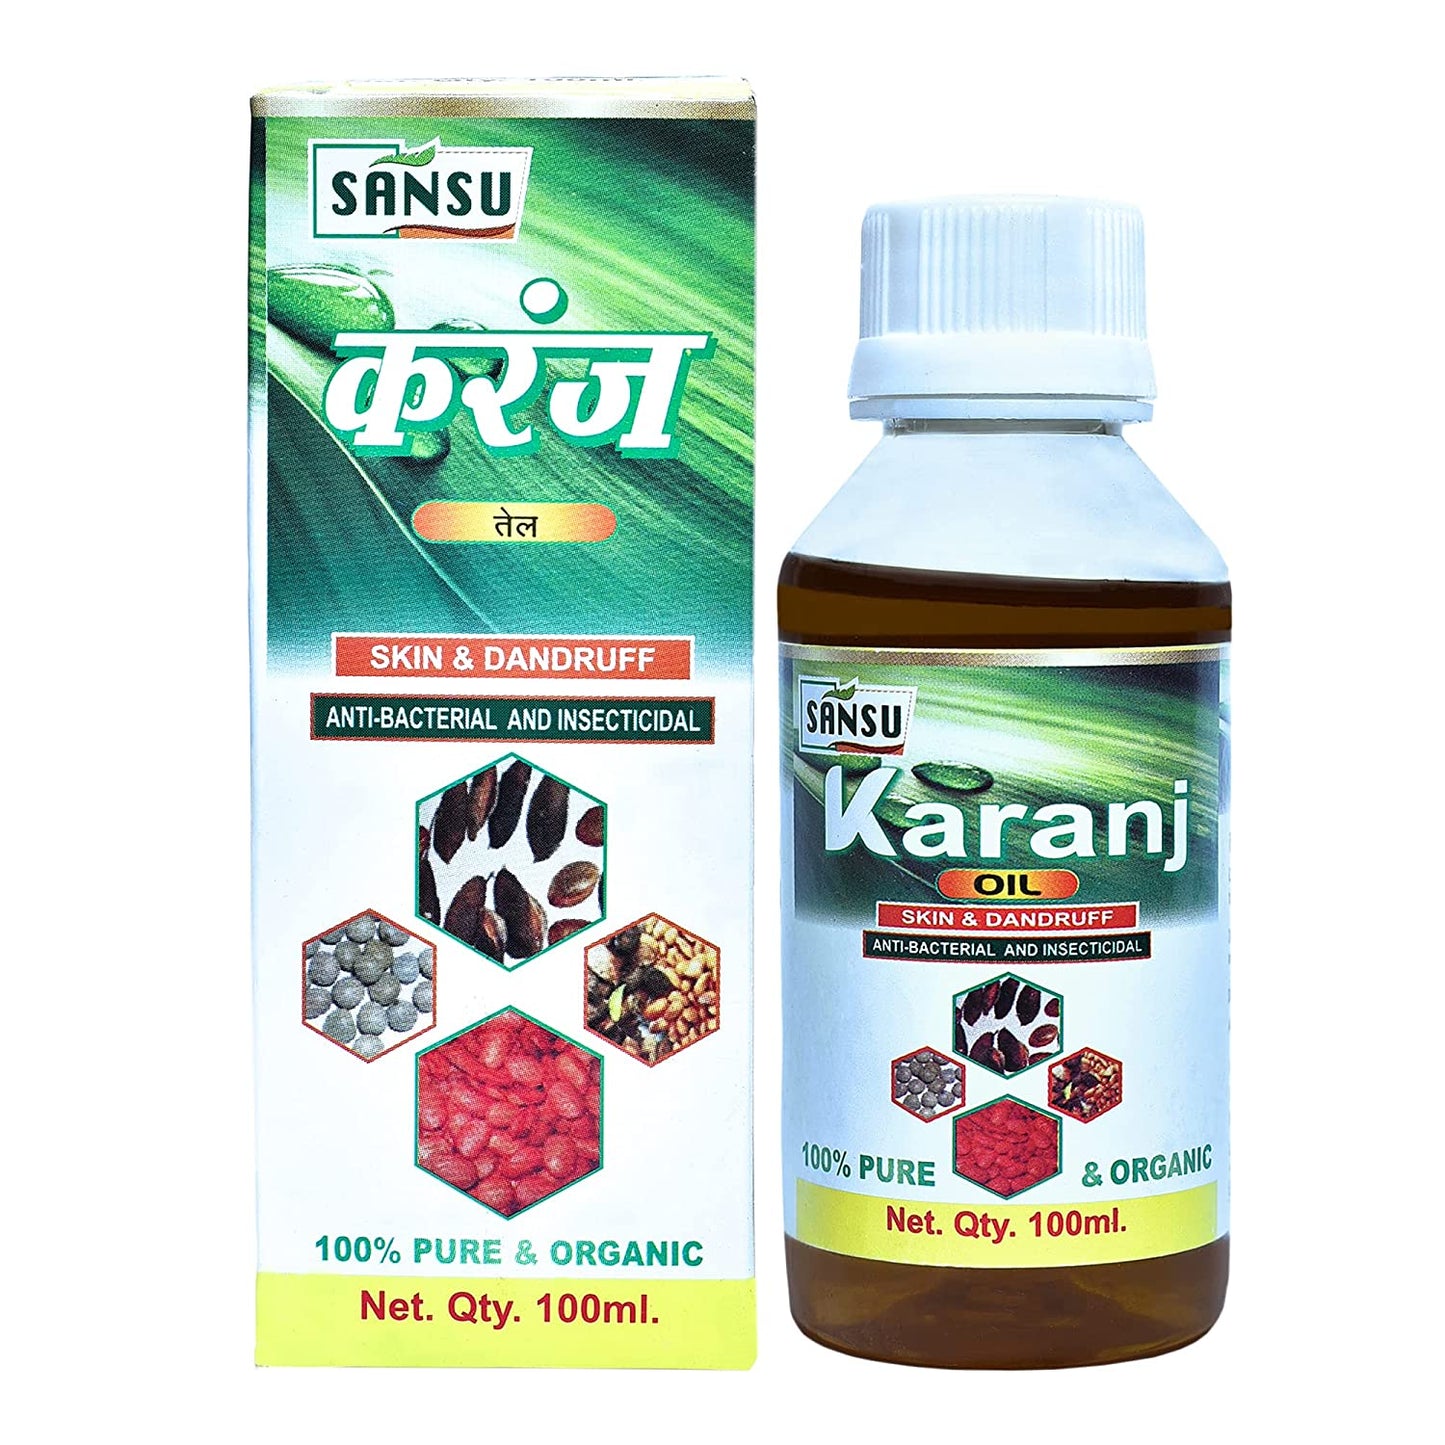 SANSU Pure Herbal karanj oil 50ml for hair skin and body